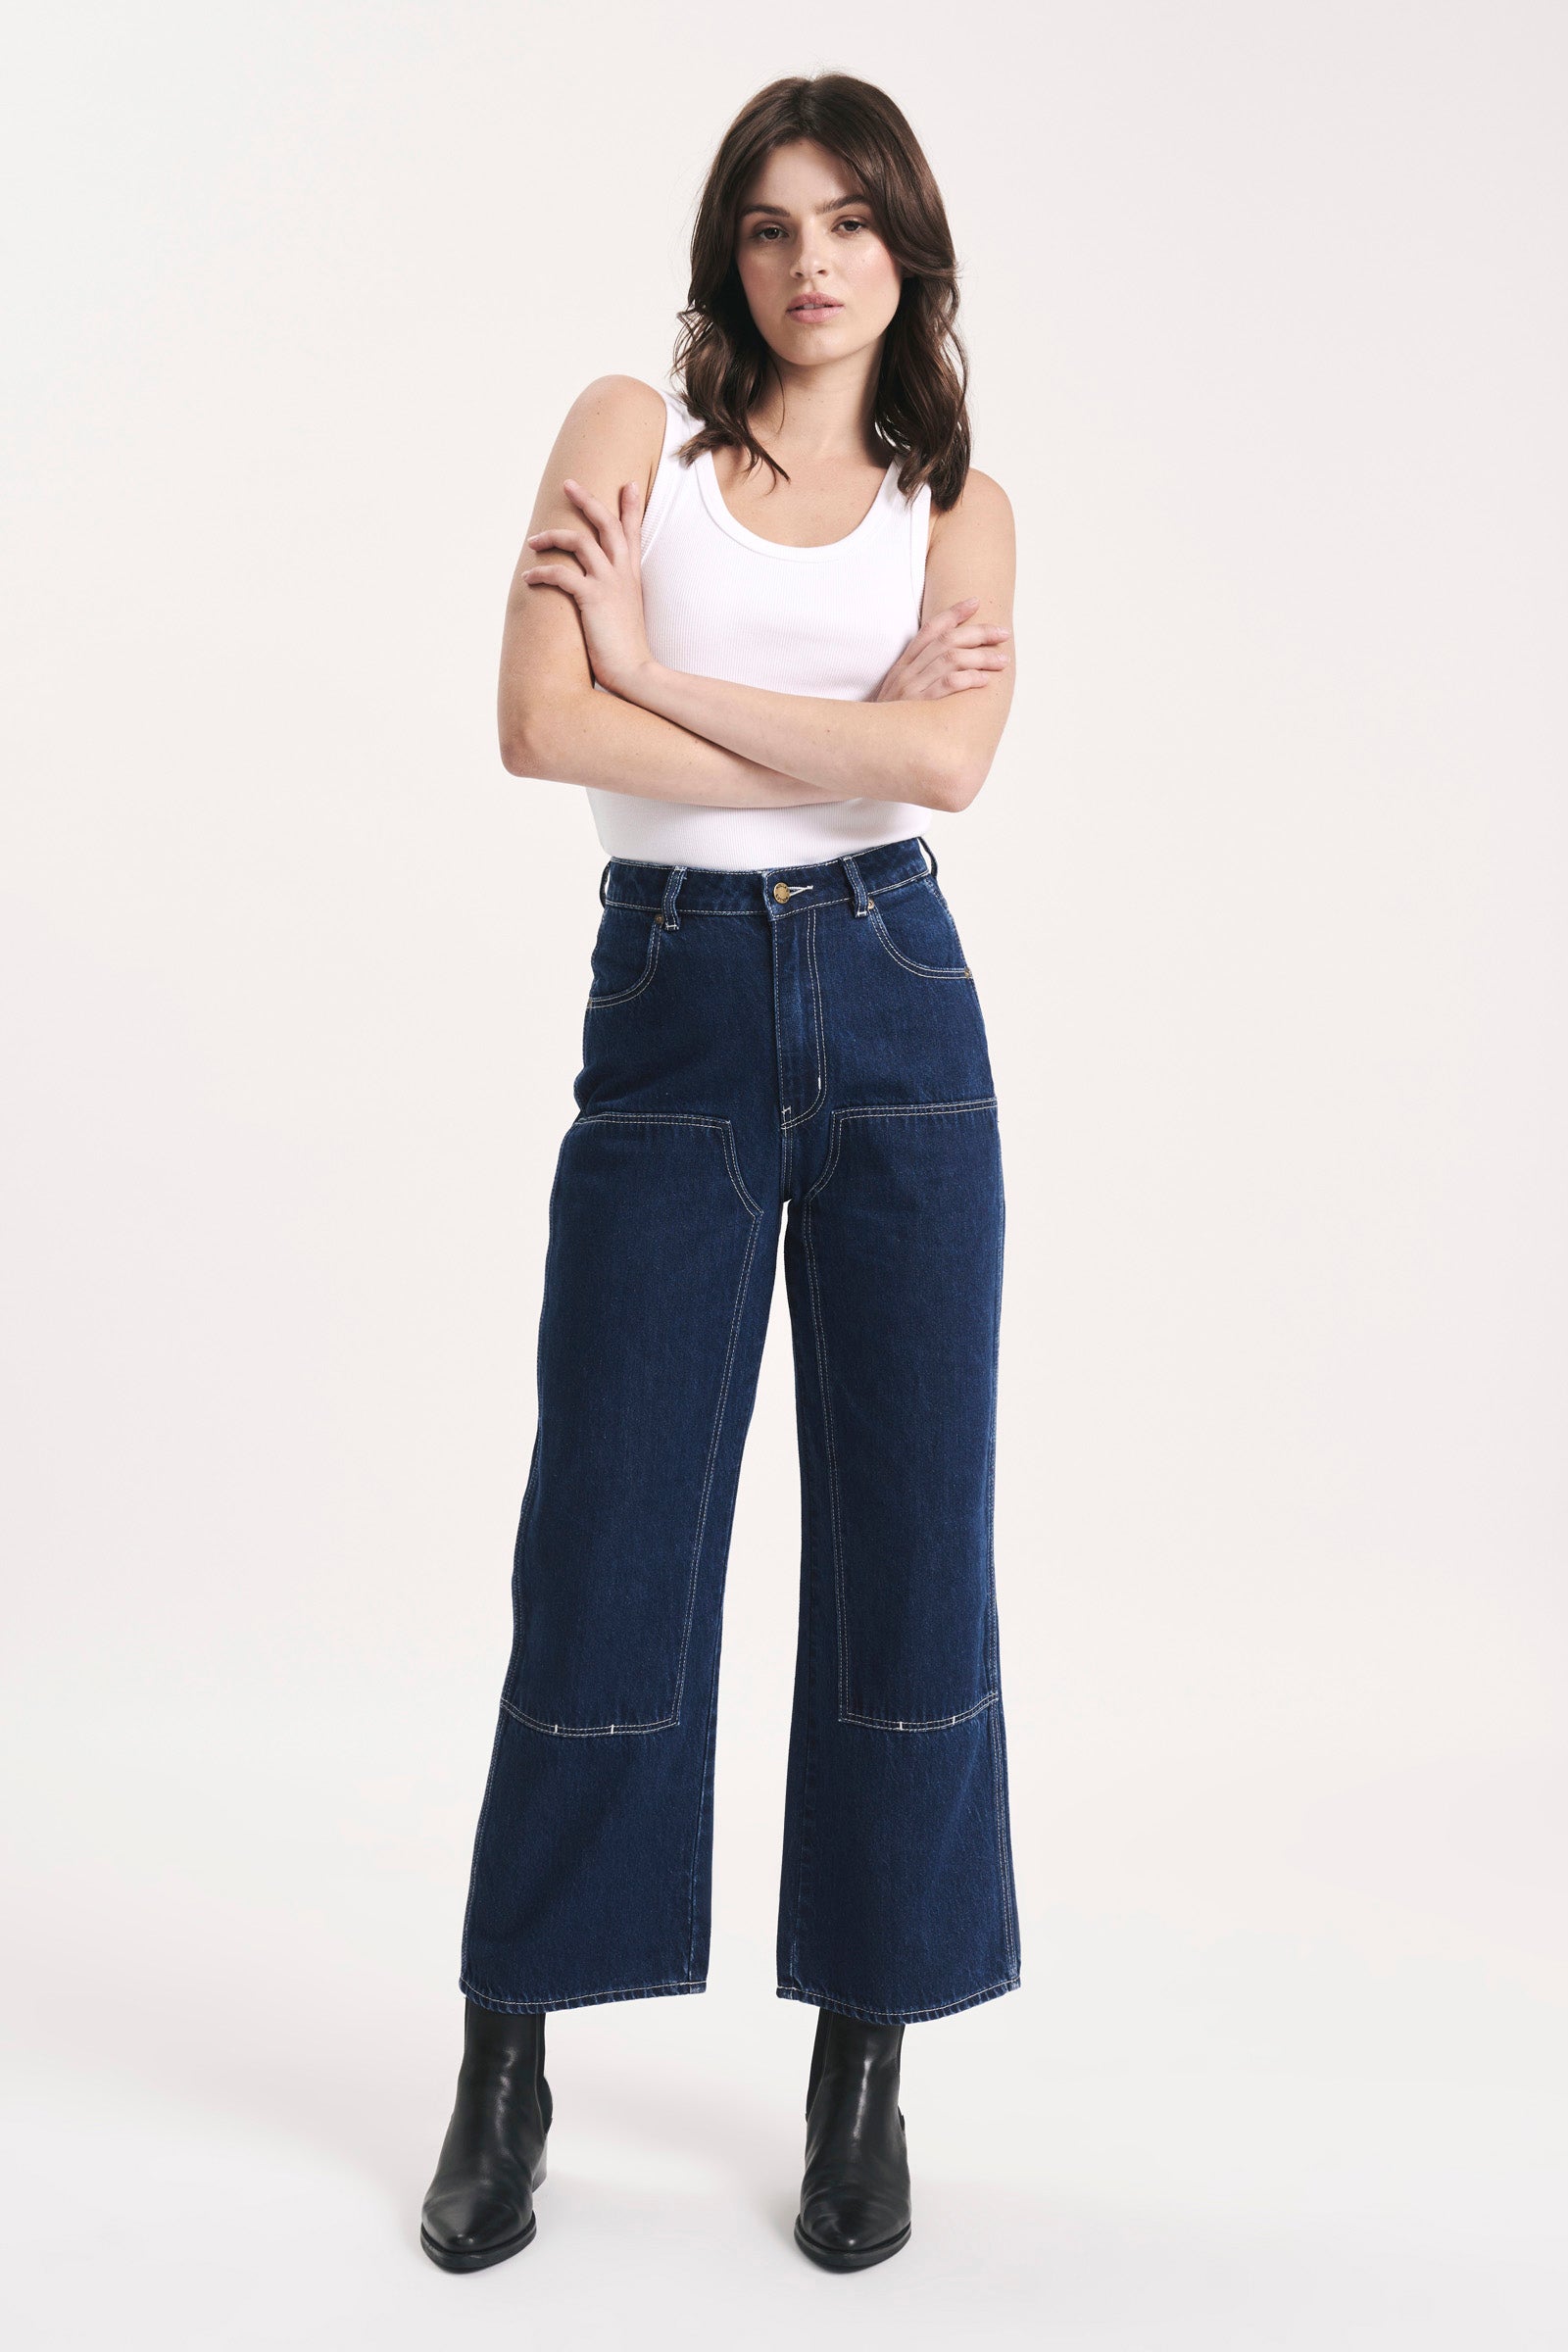 versterking Aanpassing Grace Buy Women's Denim Jeans Online | Rollas Jeans